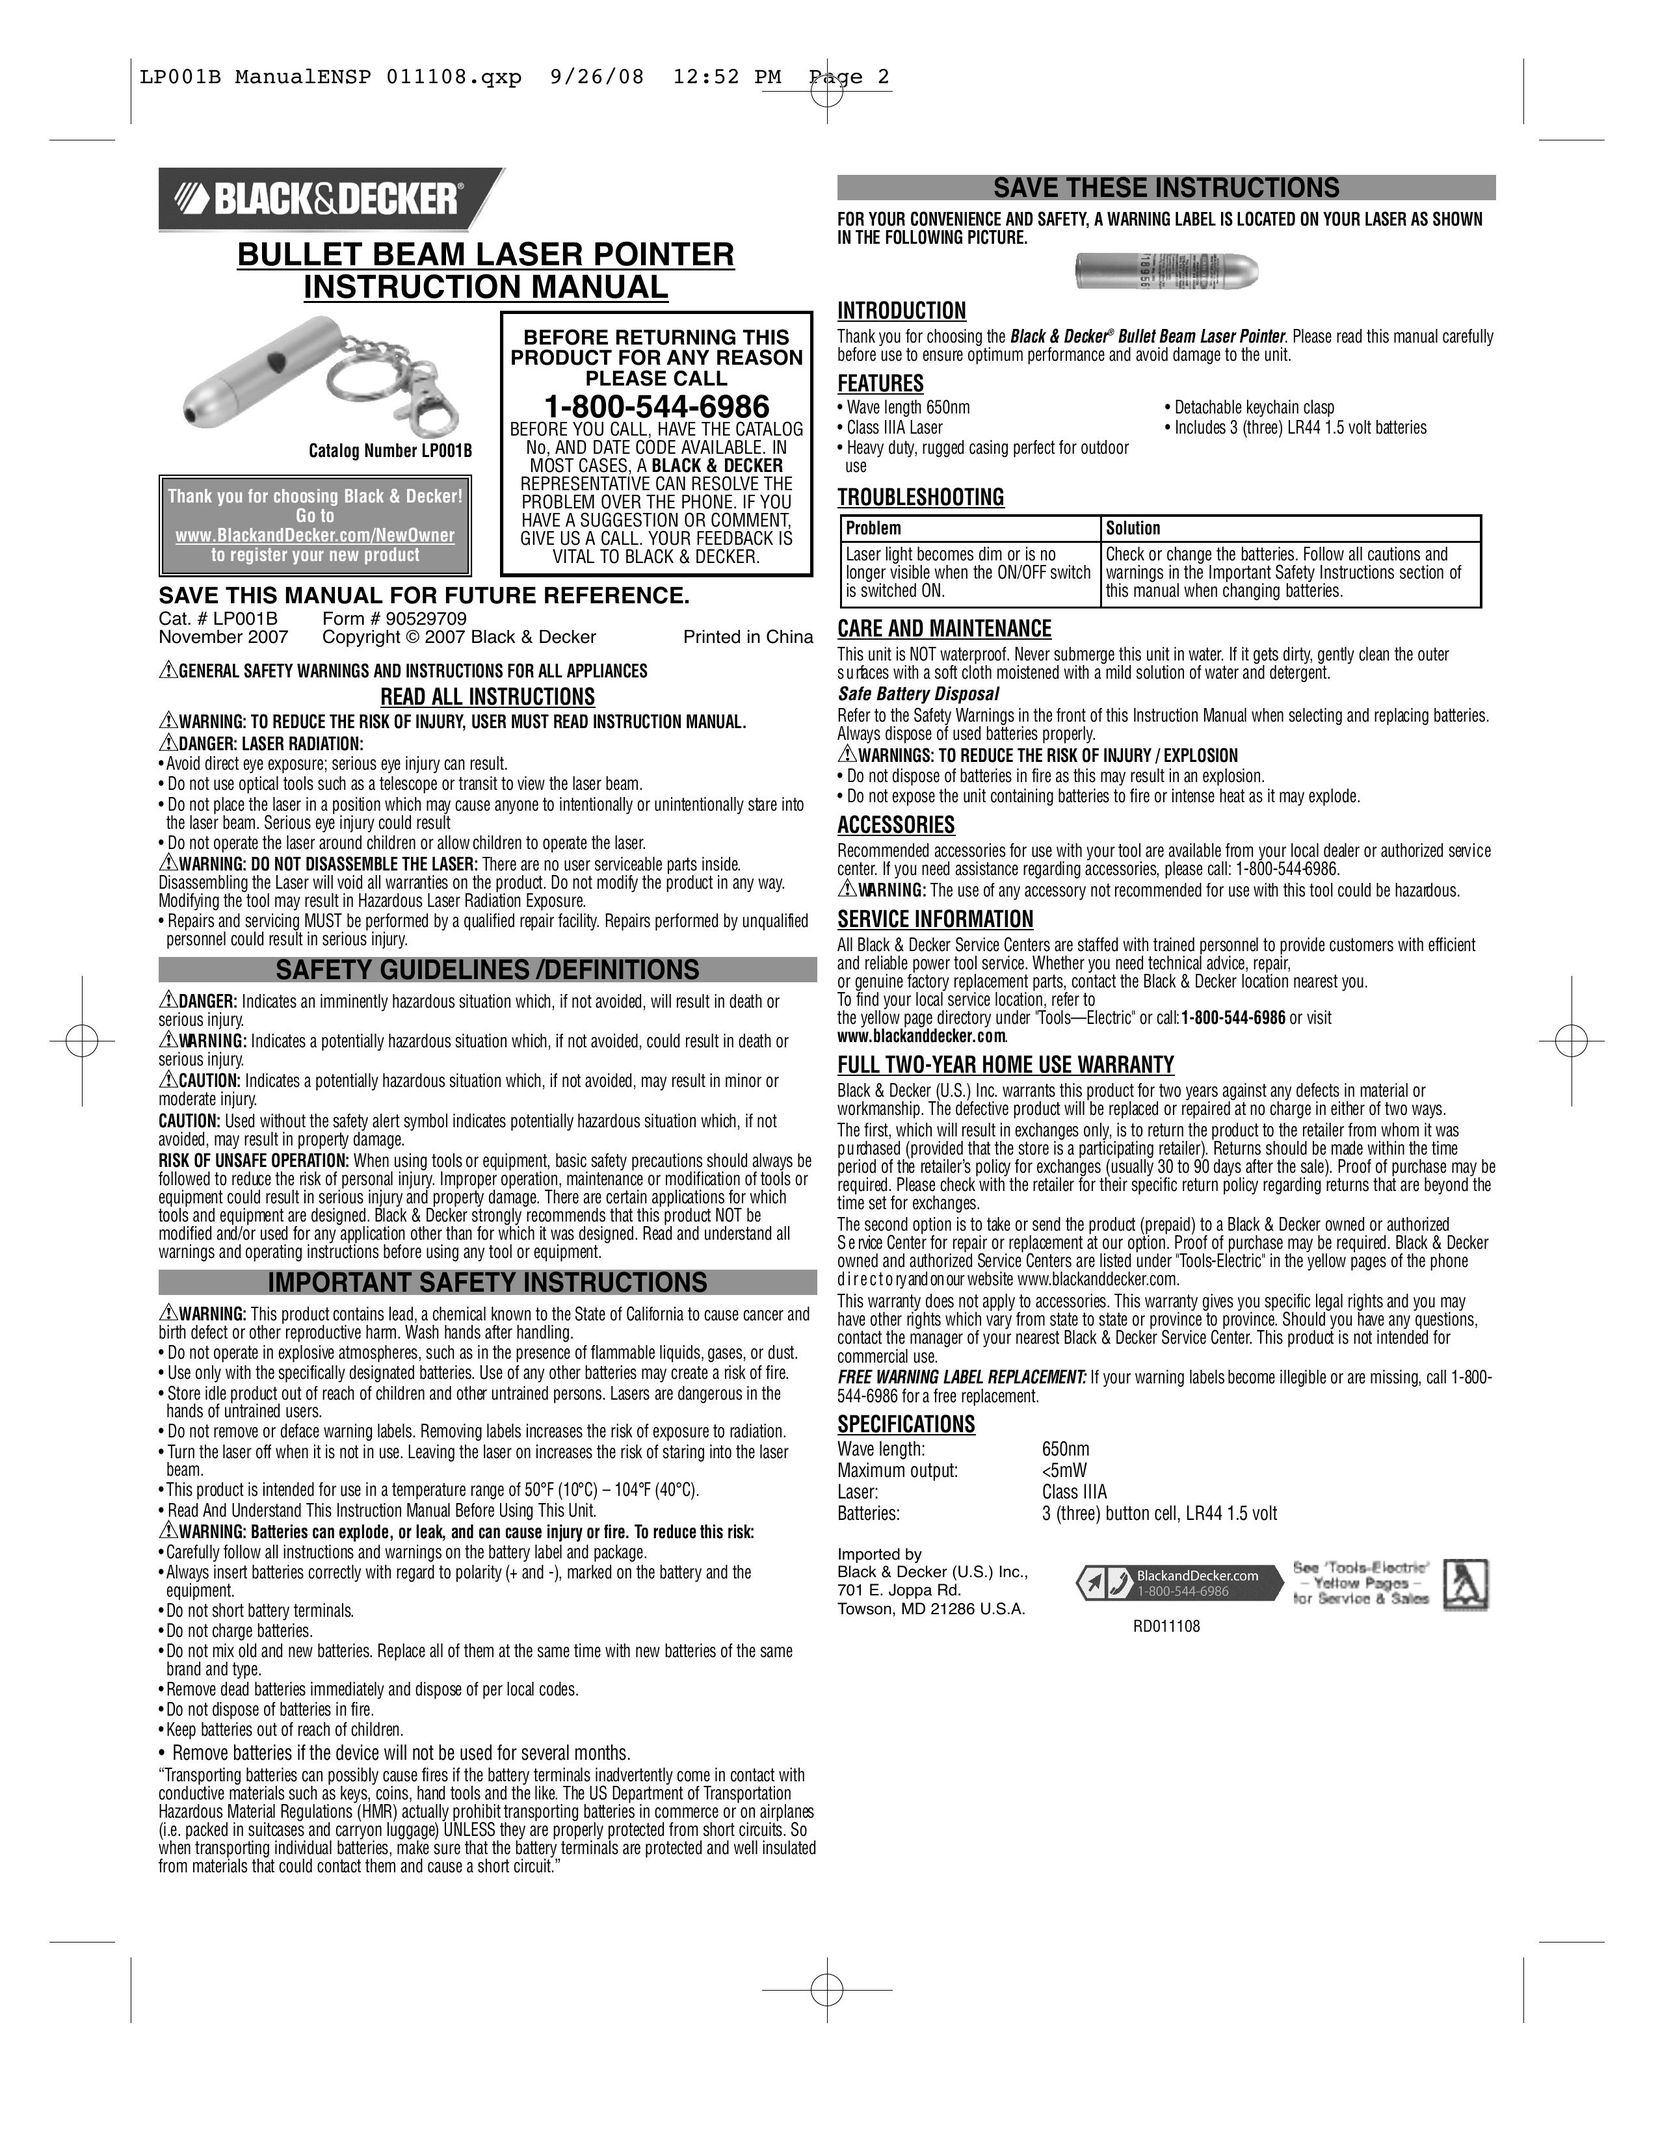 Black & Decker LP001B Laser Pointer User Manual